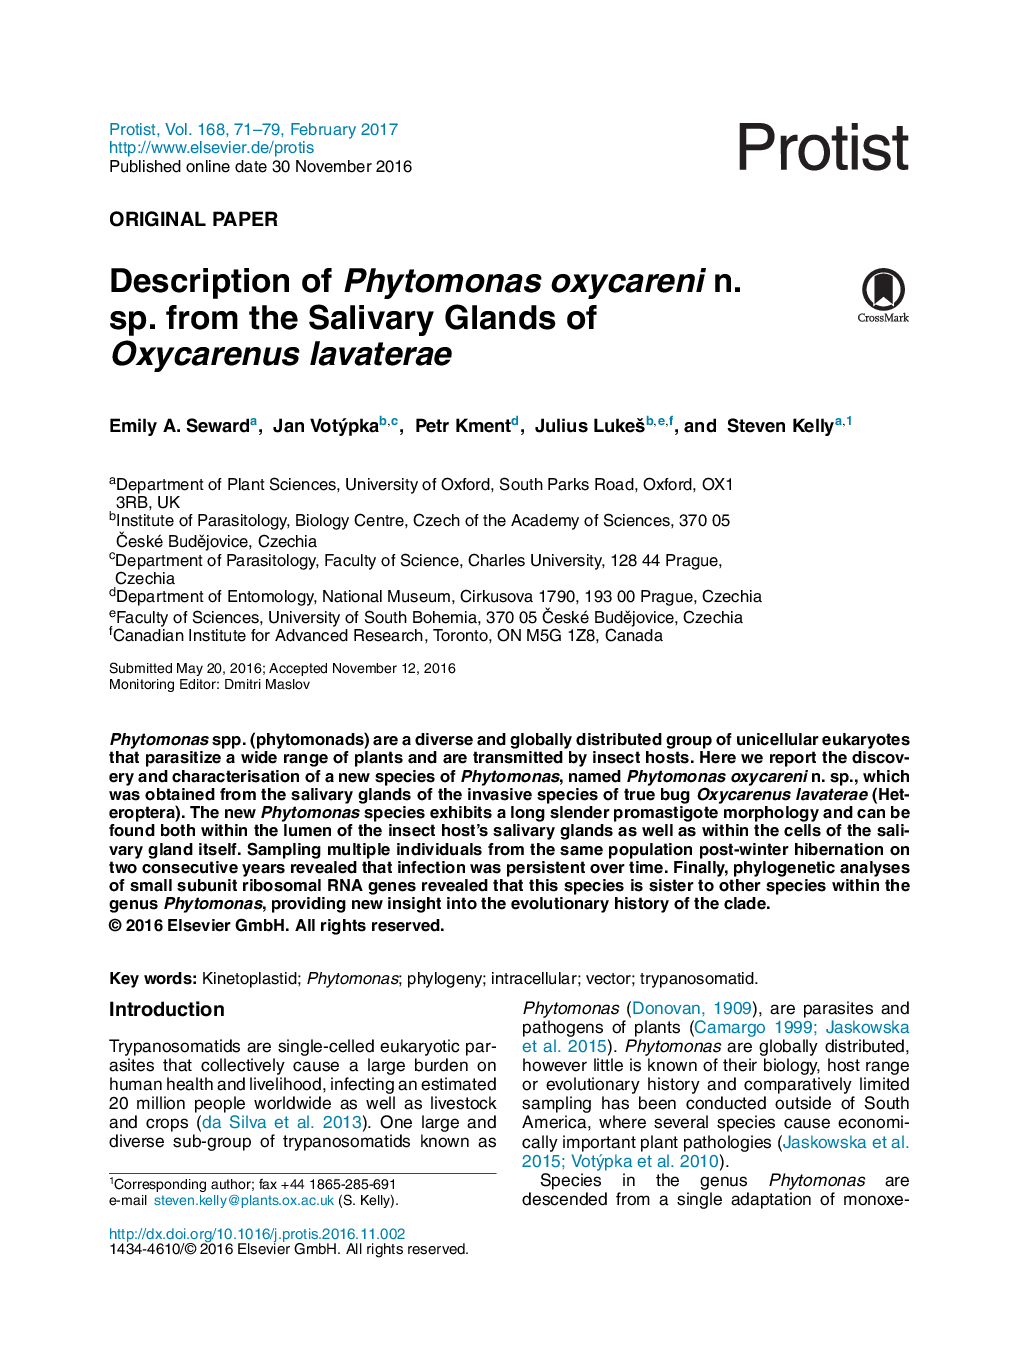 Original PaperDescription of Phytomonas oxycareni n. sp. from the Salivary Glands of Oxycarenus lavaterae